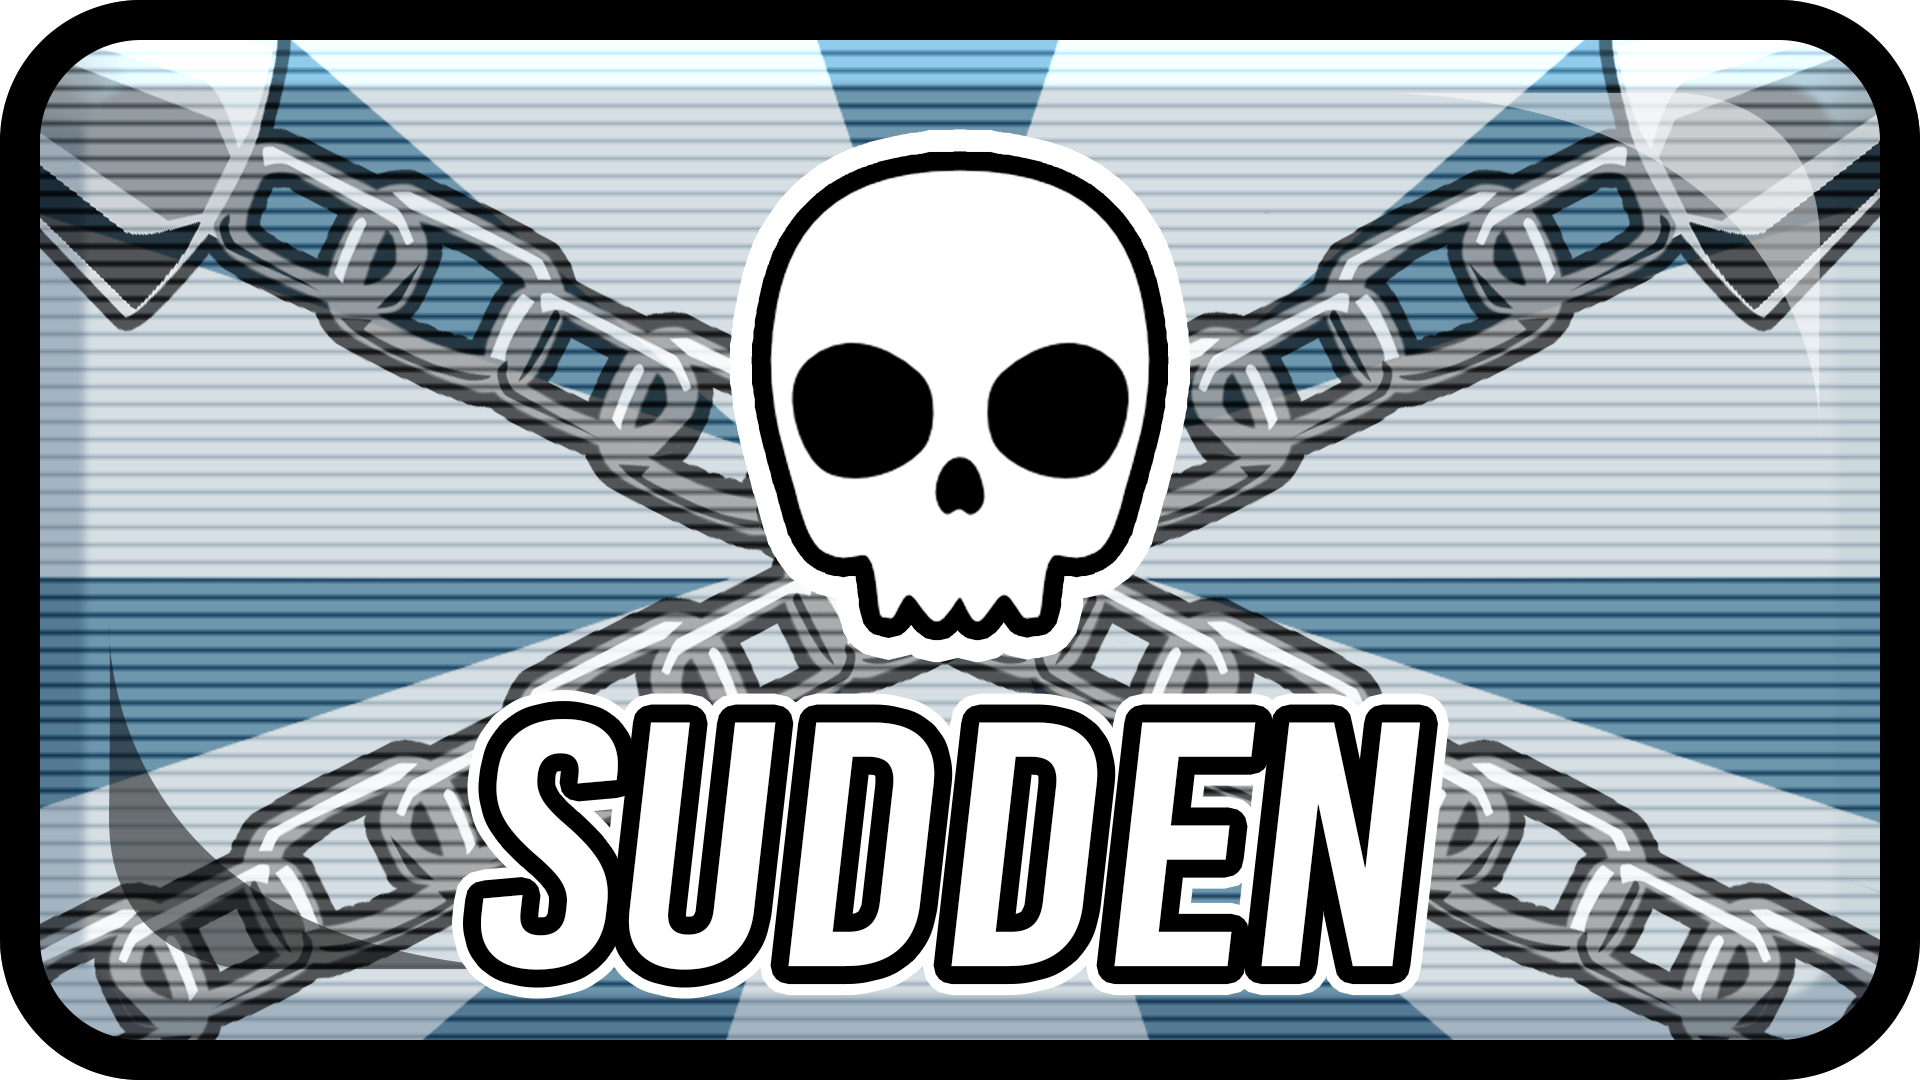 Icon for Sudden Death